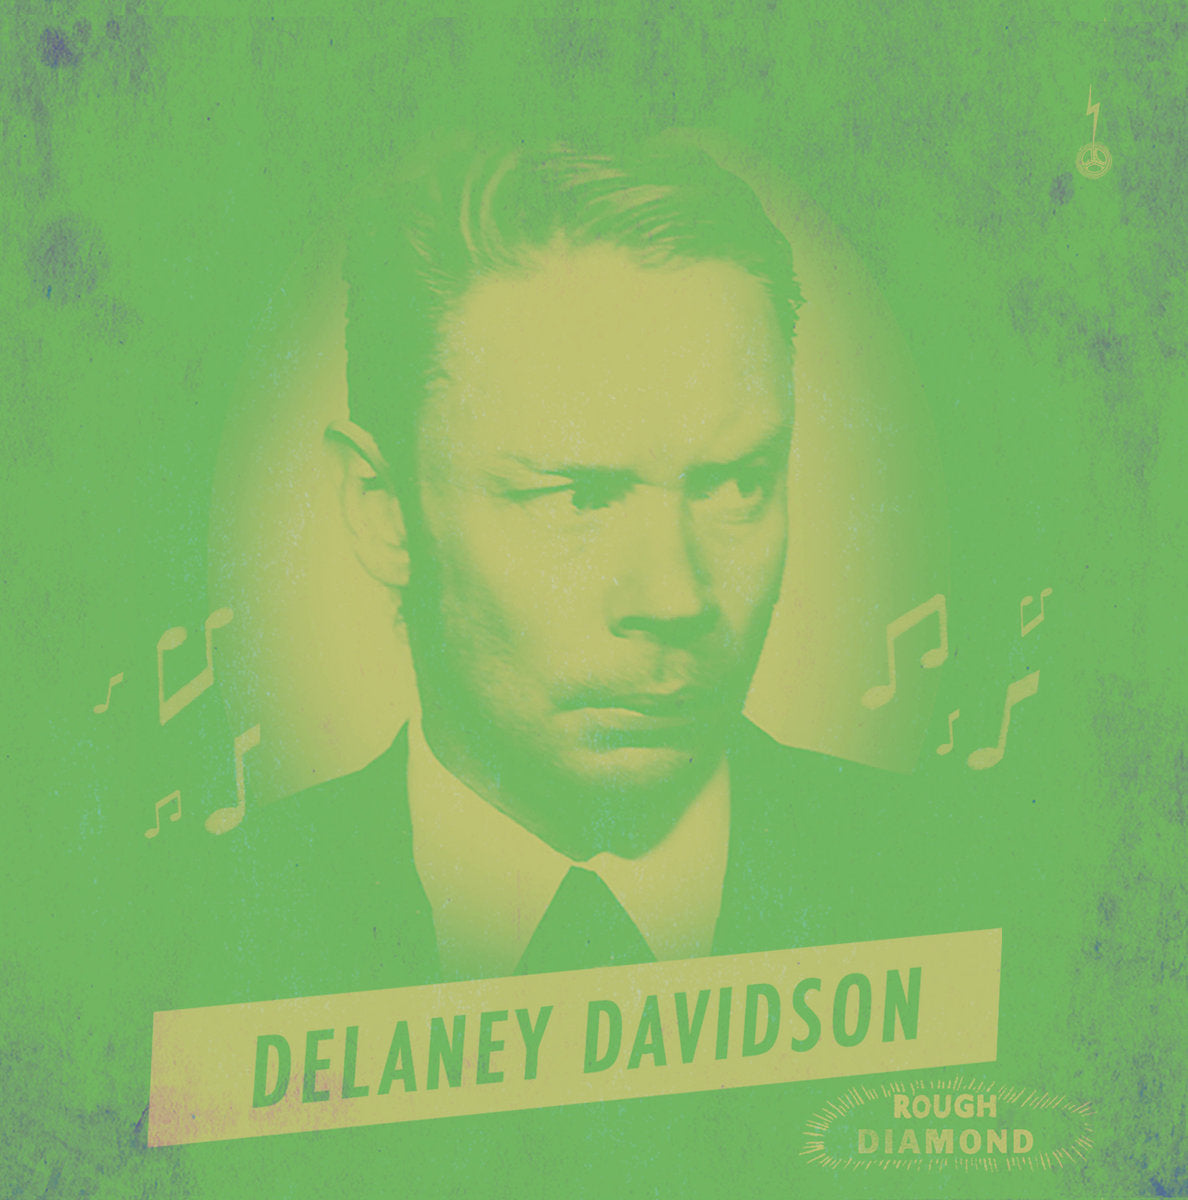 Delaney Davidson – Rough Diamond | Buy the Vinyl LP from Flying Nun Records